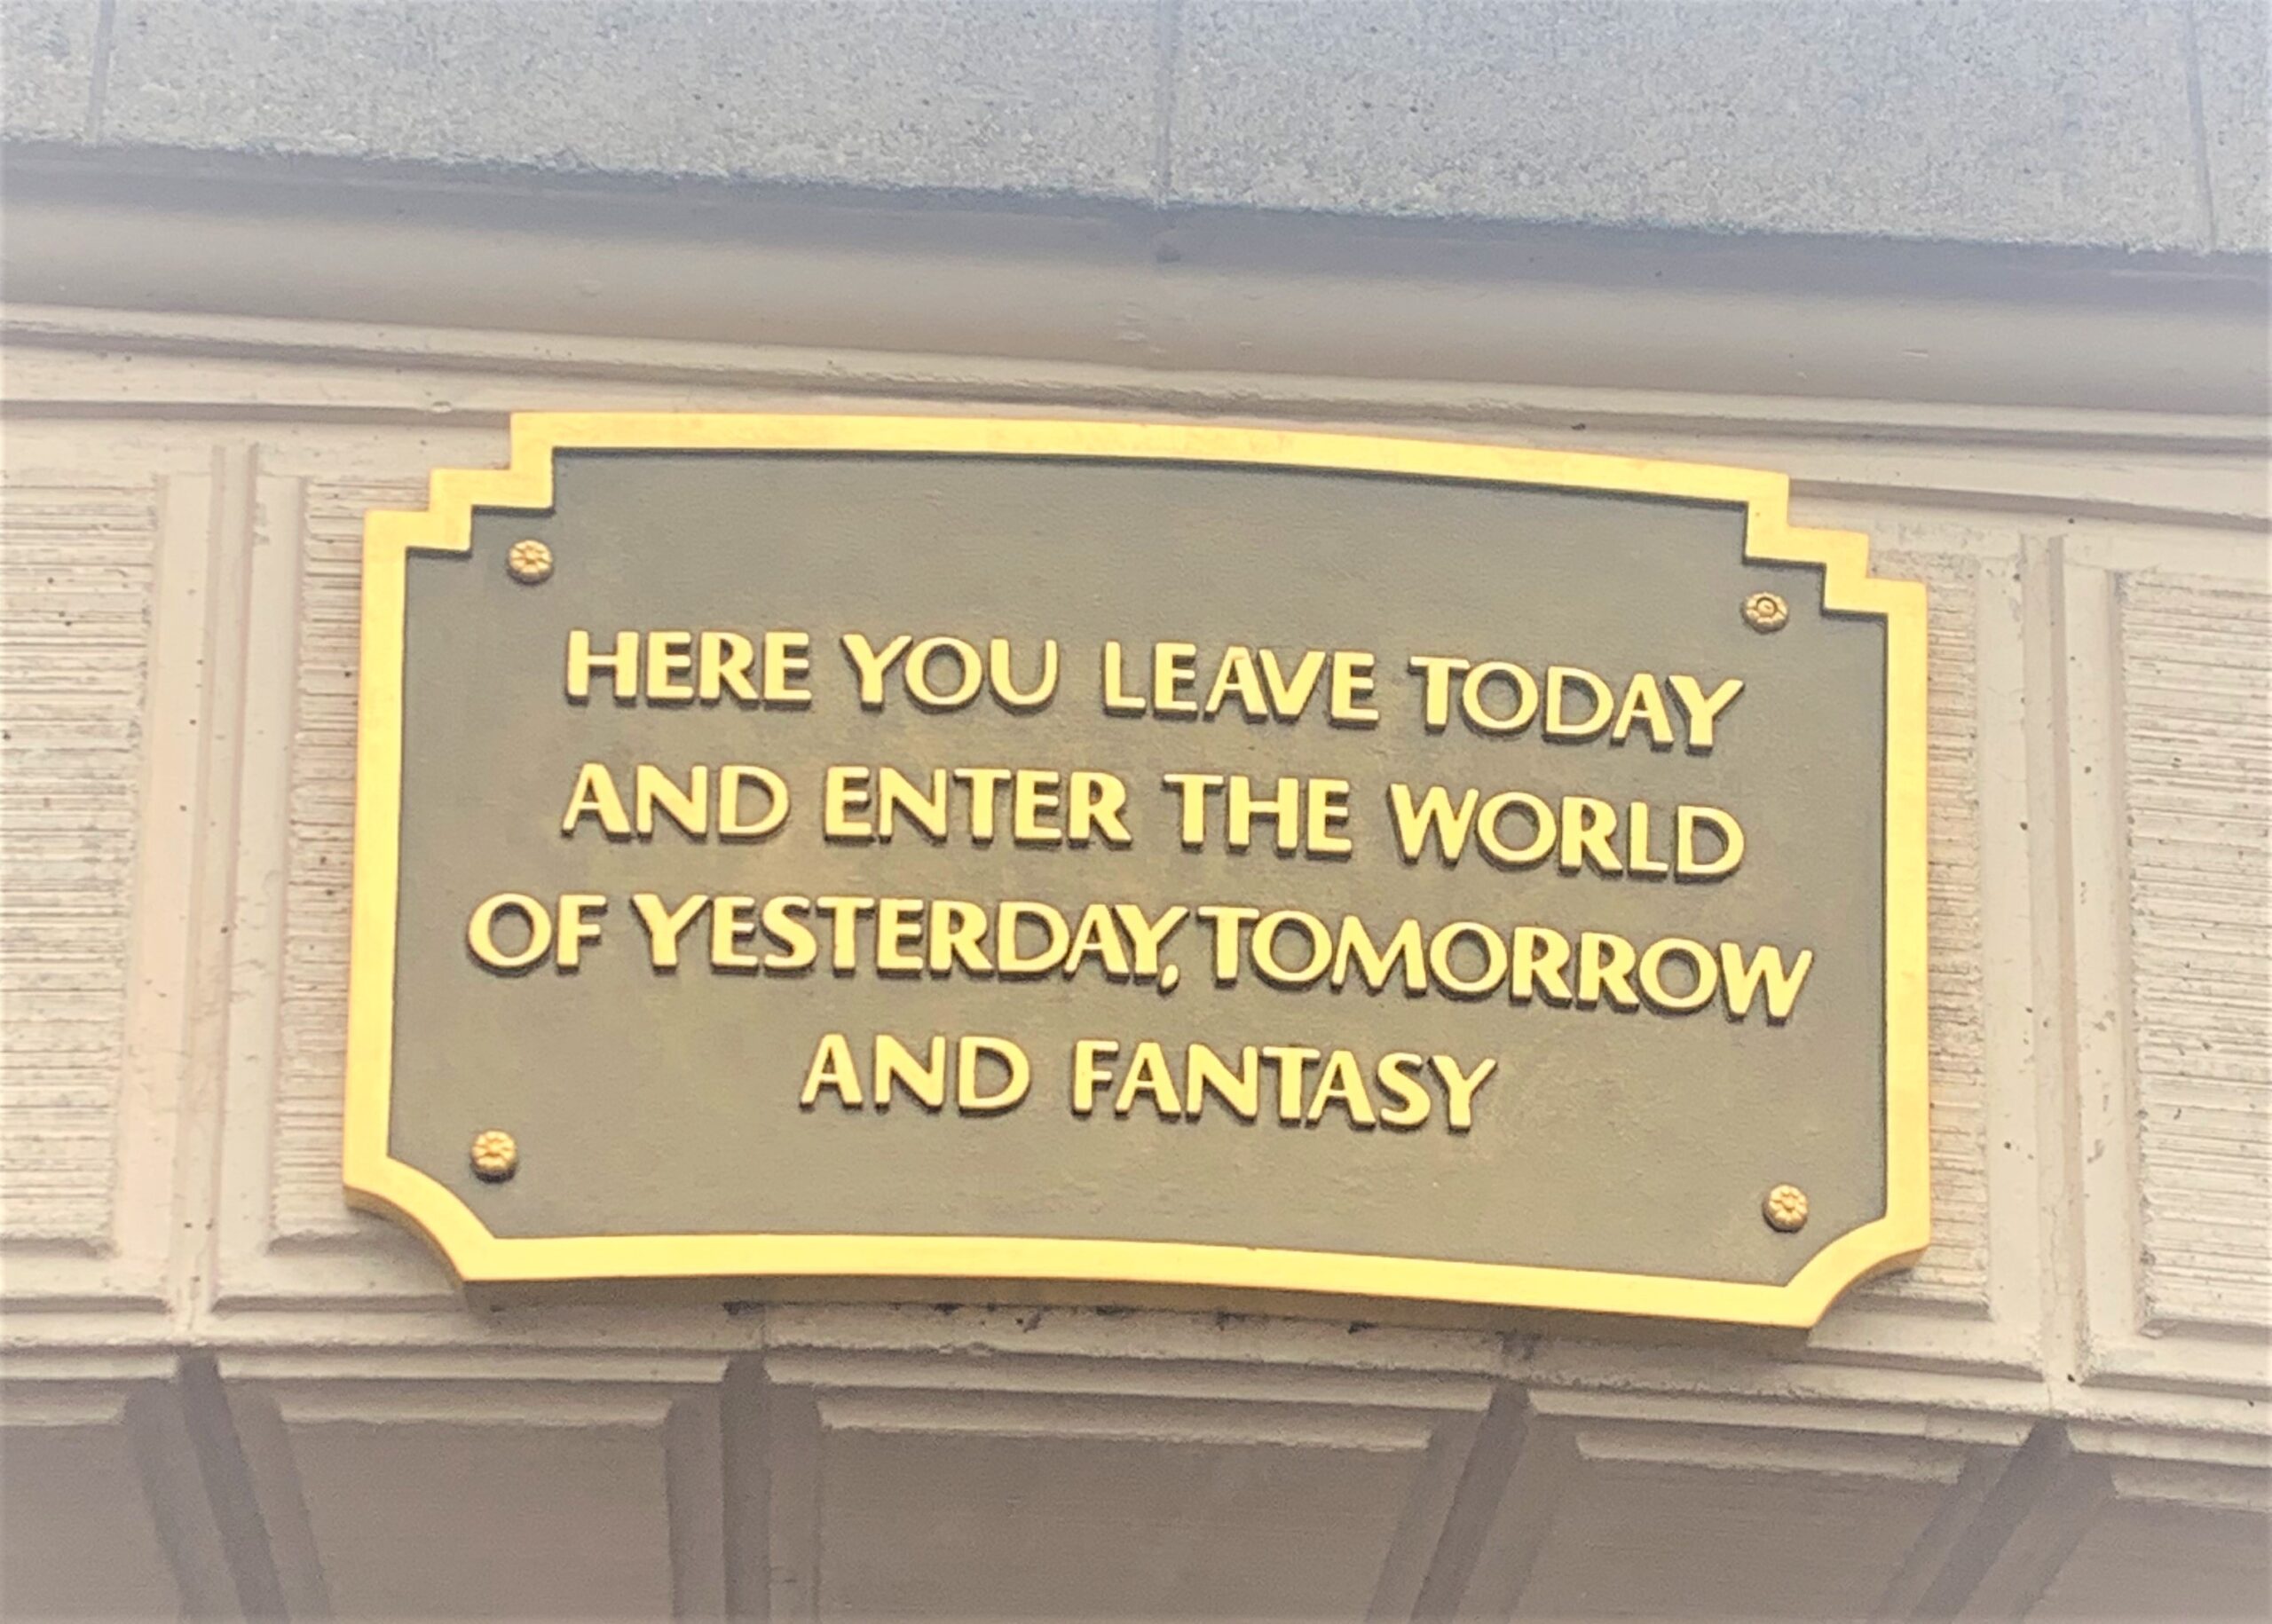 Disneyland Welcome sign